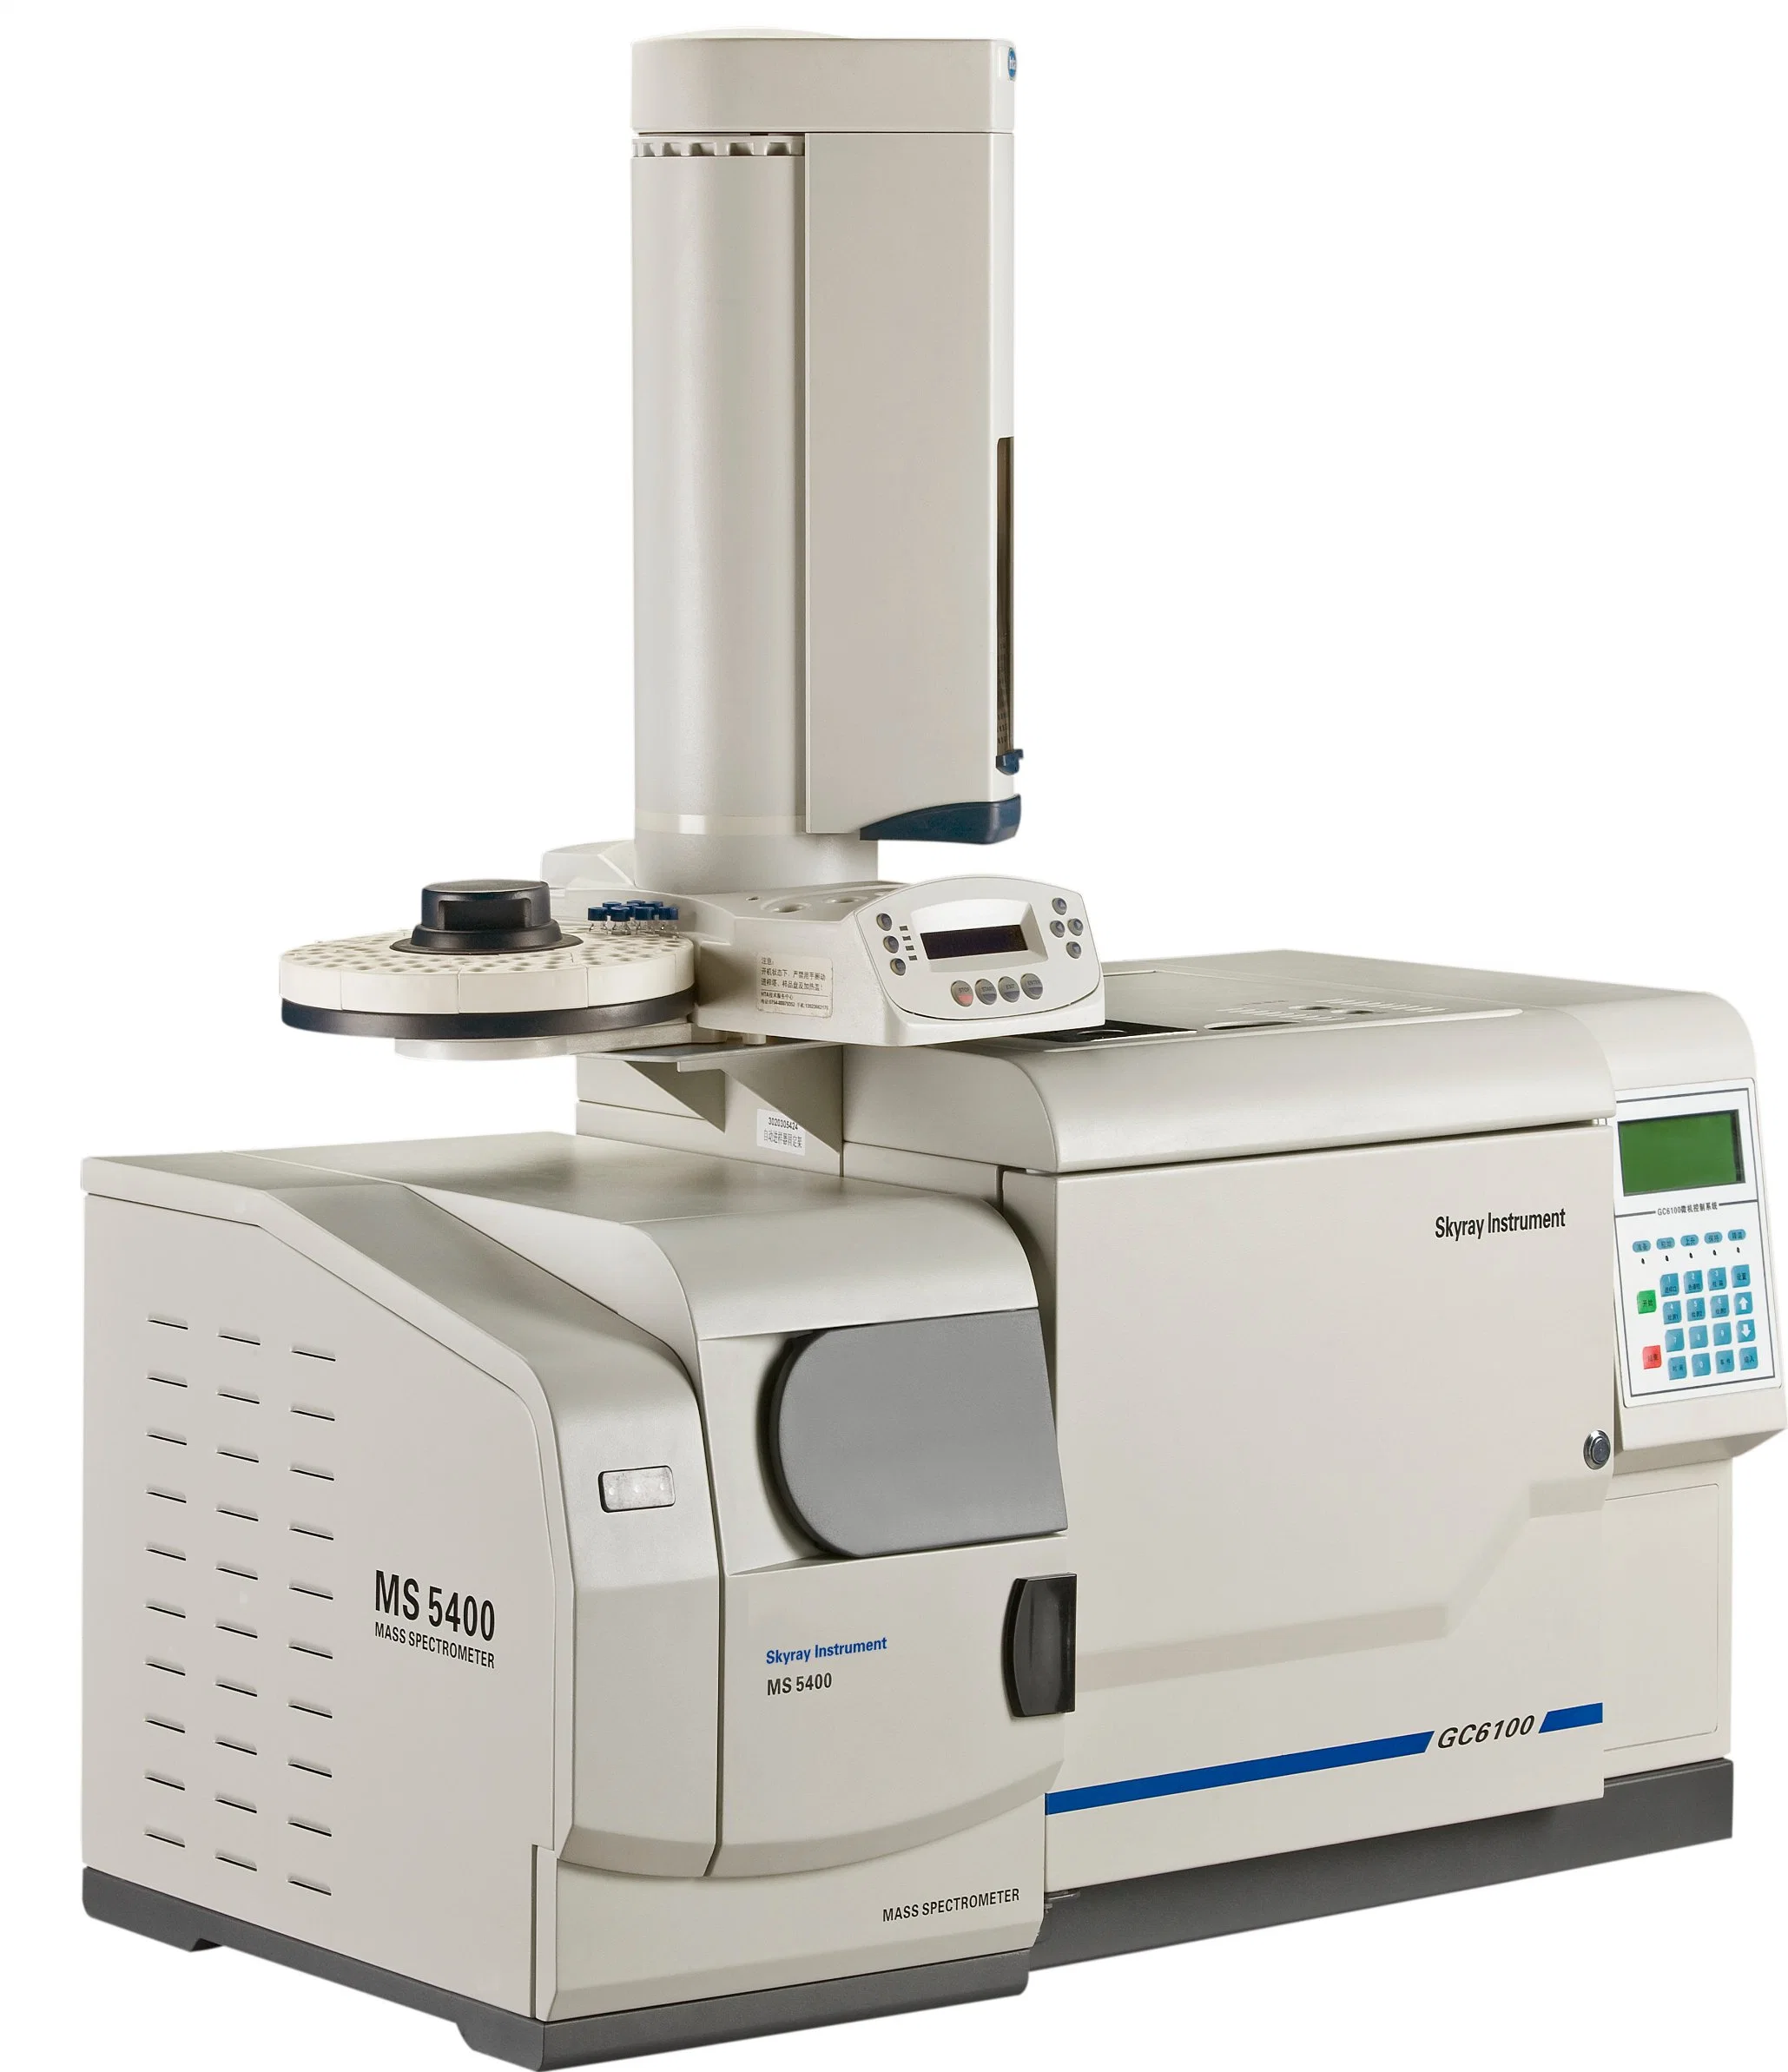 Gaschromatograph Massenspektrometer Gc-Ms